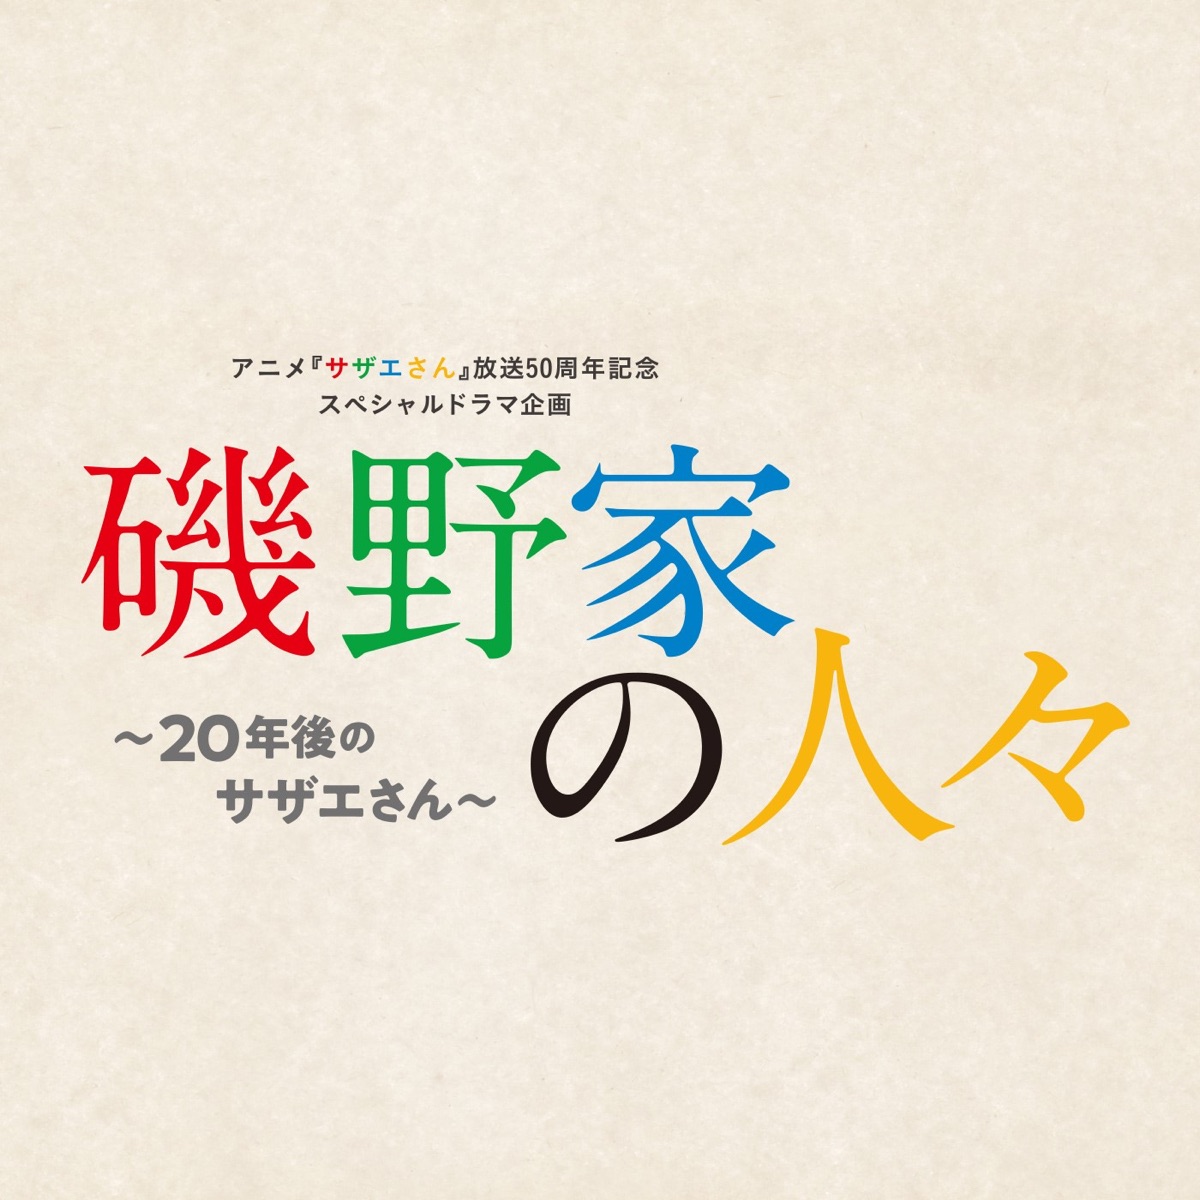 NAOKI SATO Collections ”Anemone/EUREKA SEVEN HI-EVOLUTION”UTION by 